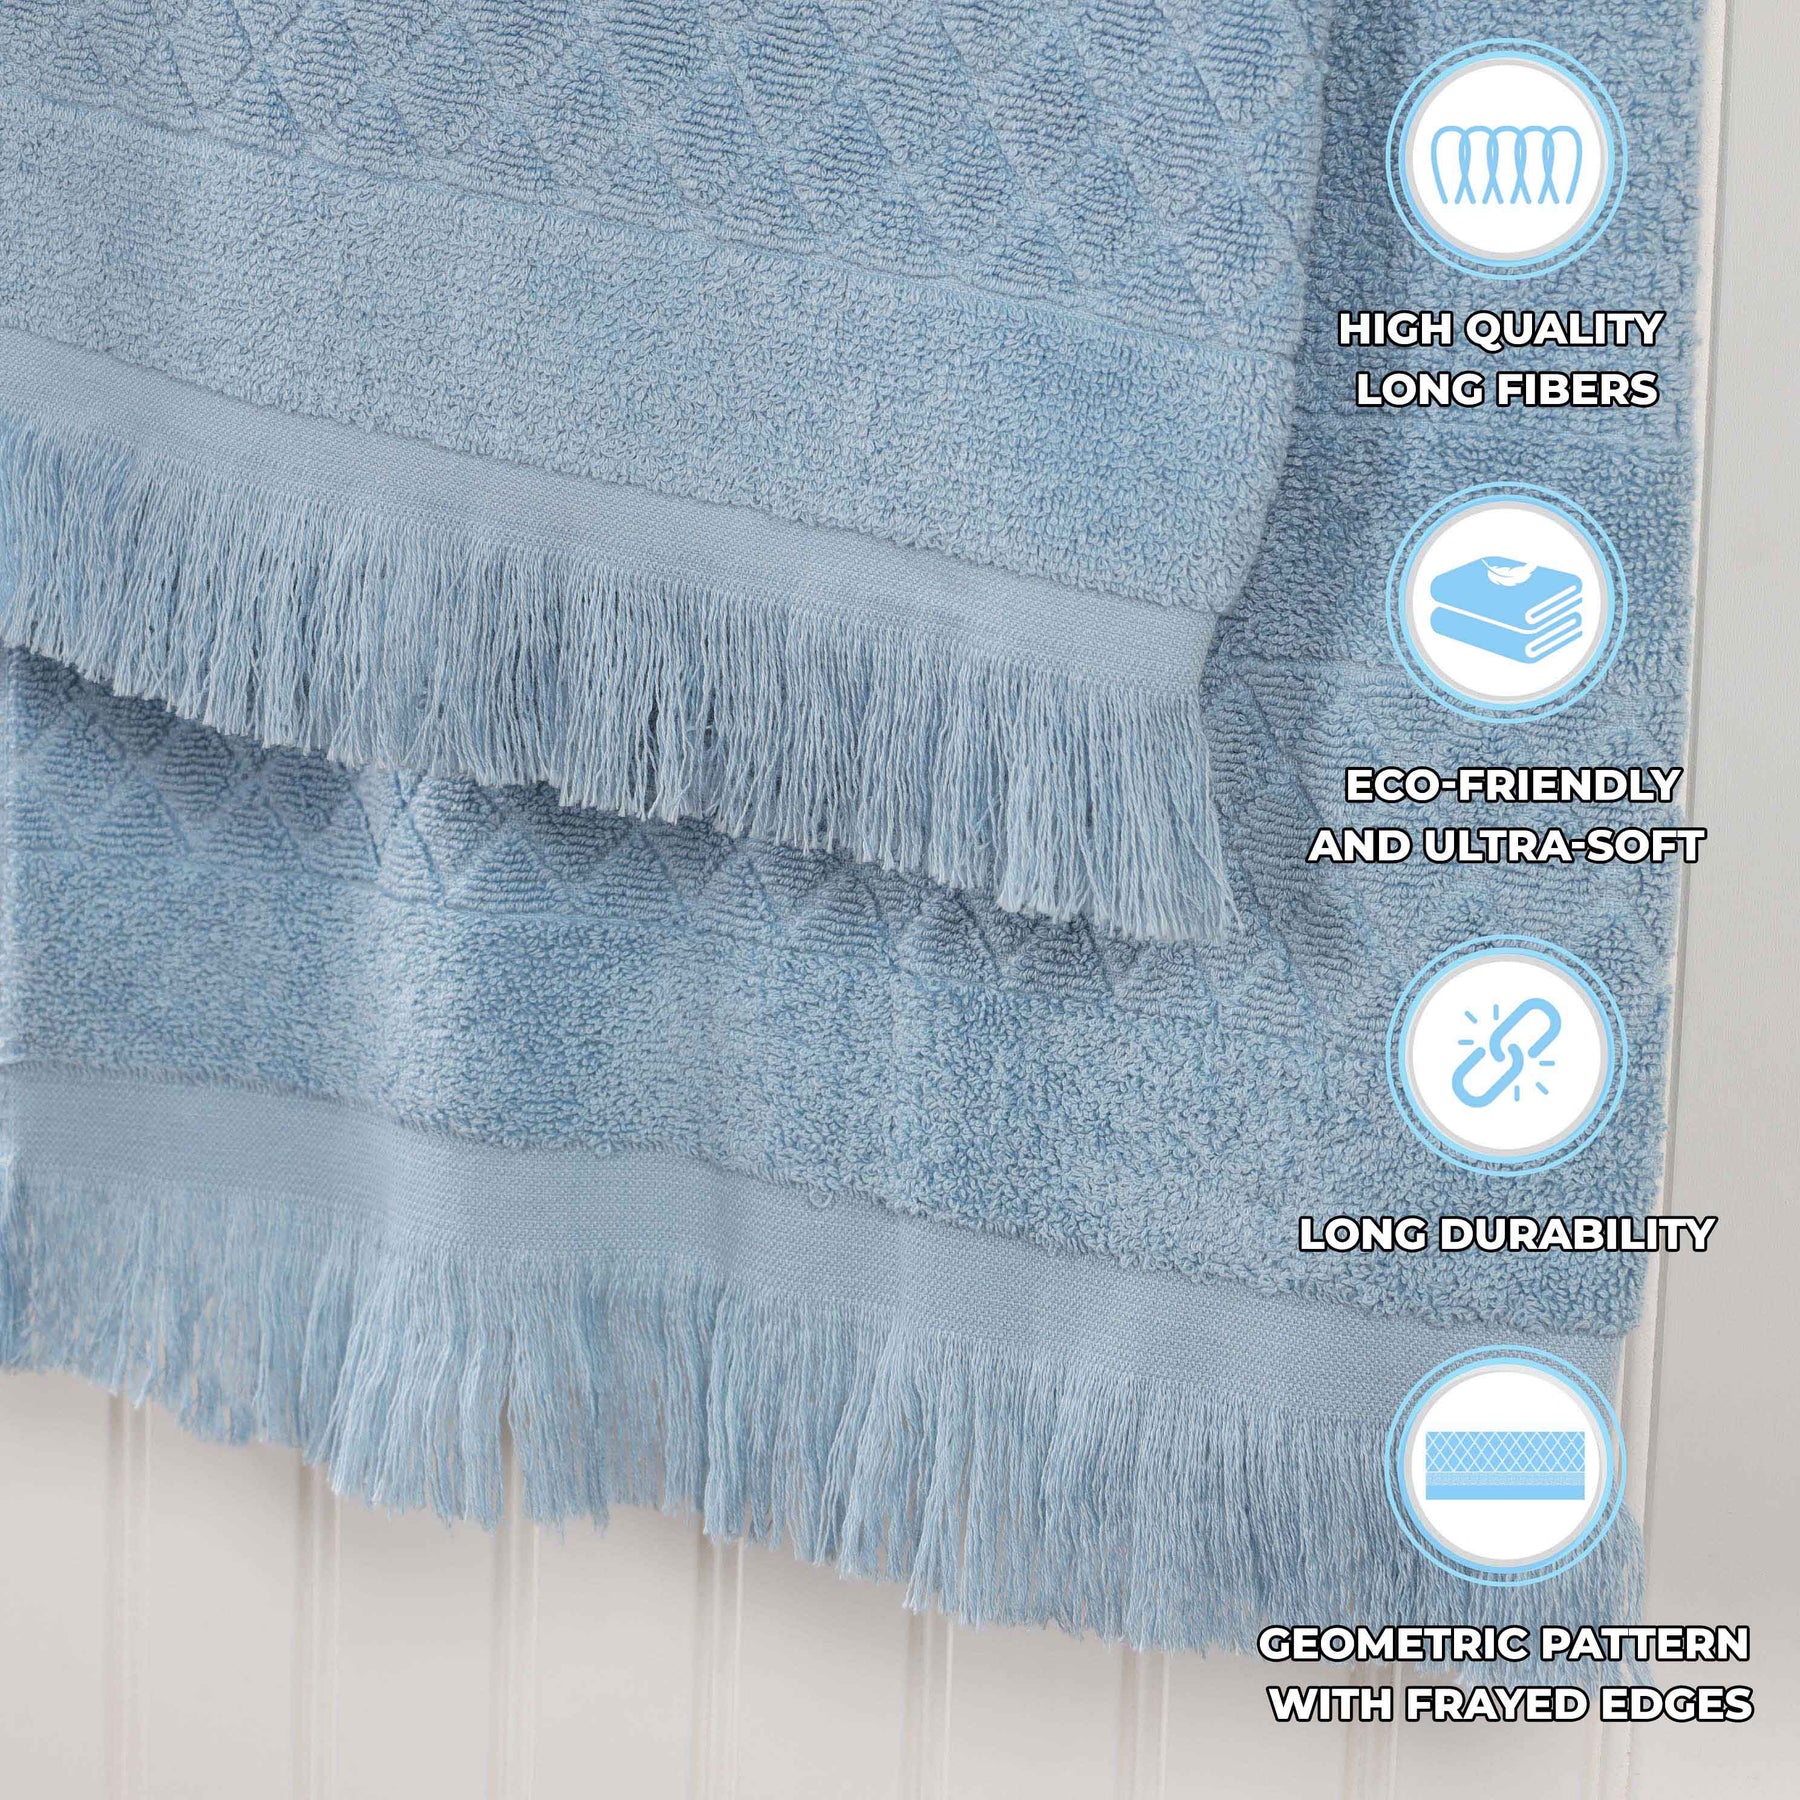 Rolla Cotton Geometric Jacquard Plush Face Towel Washcloth - Blue